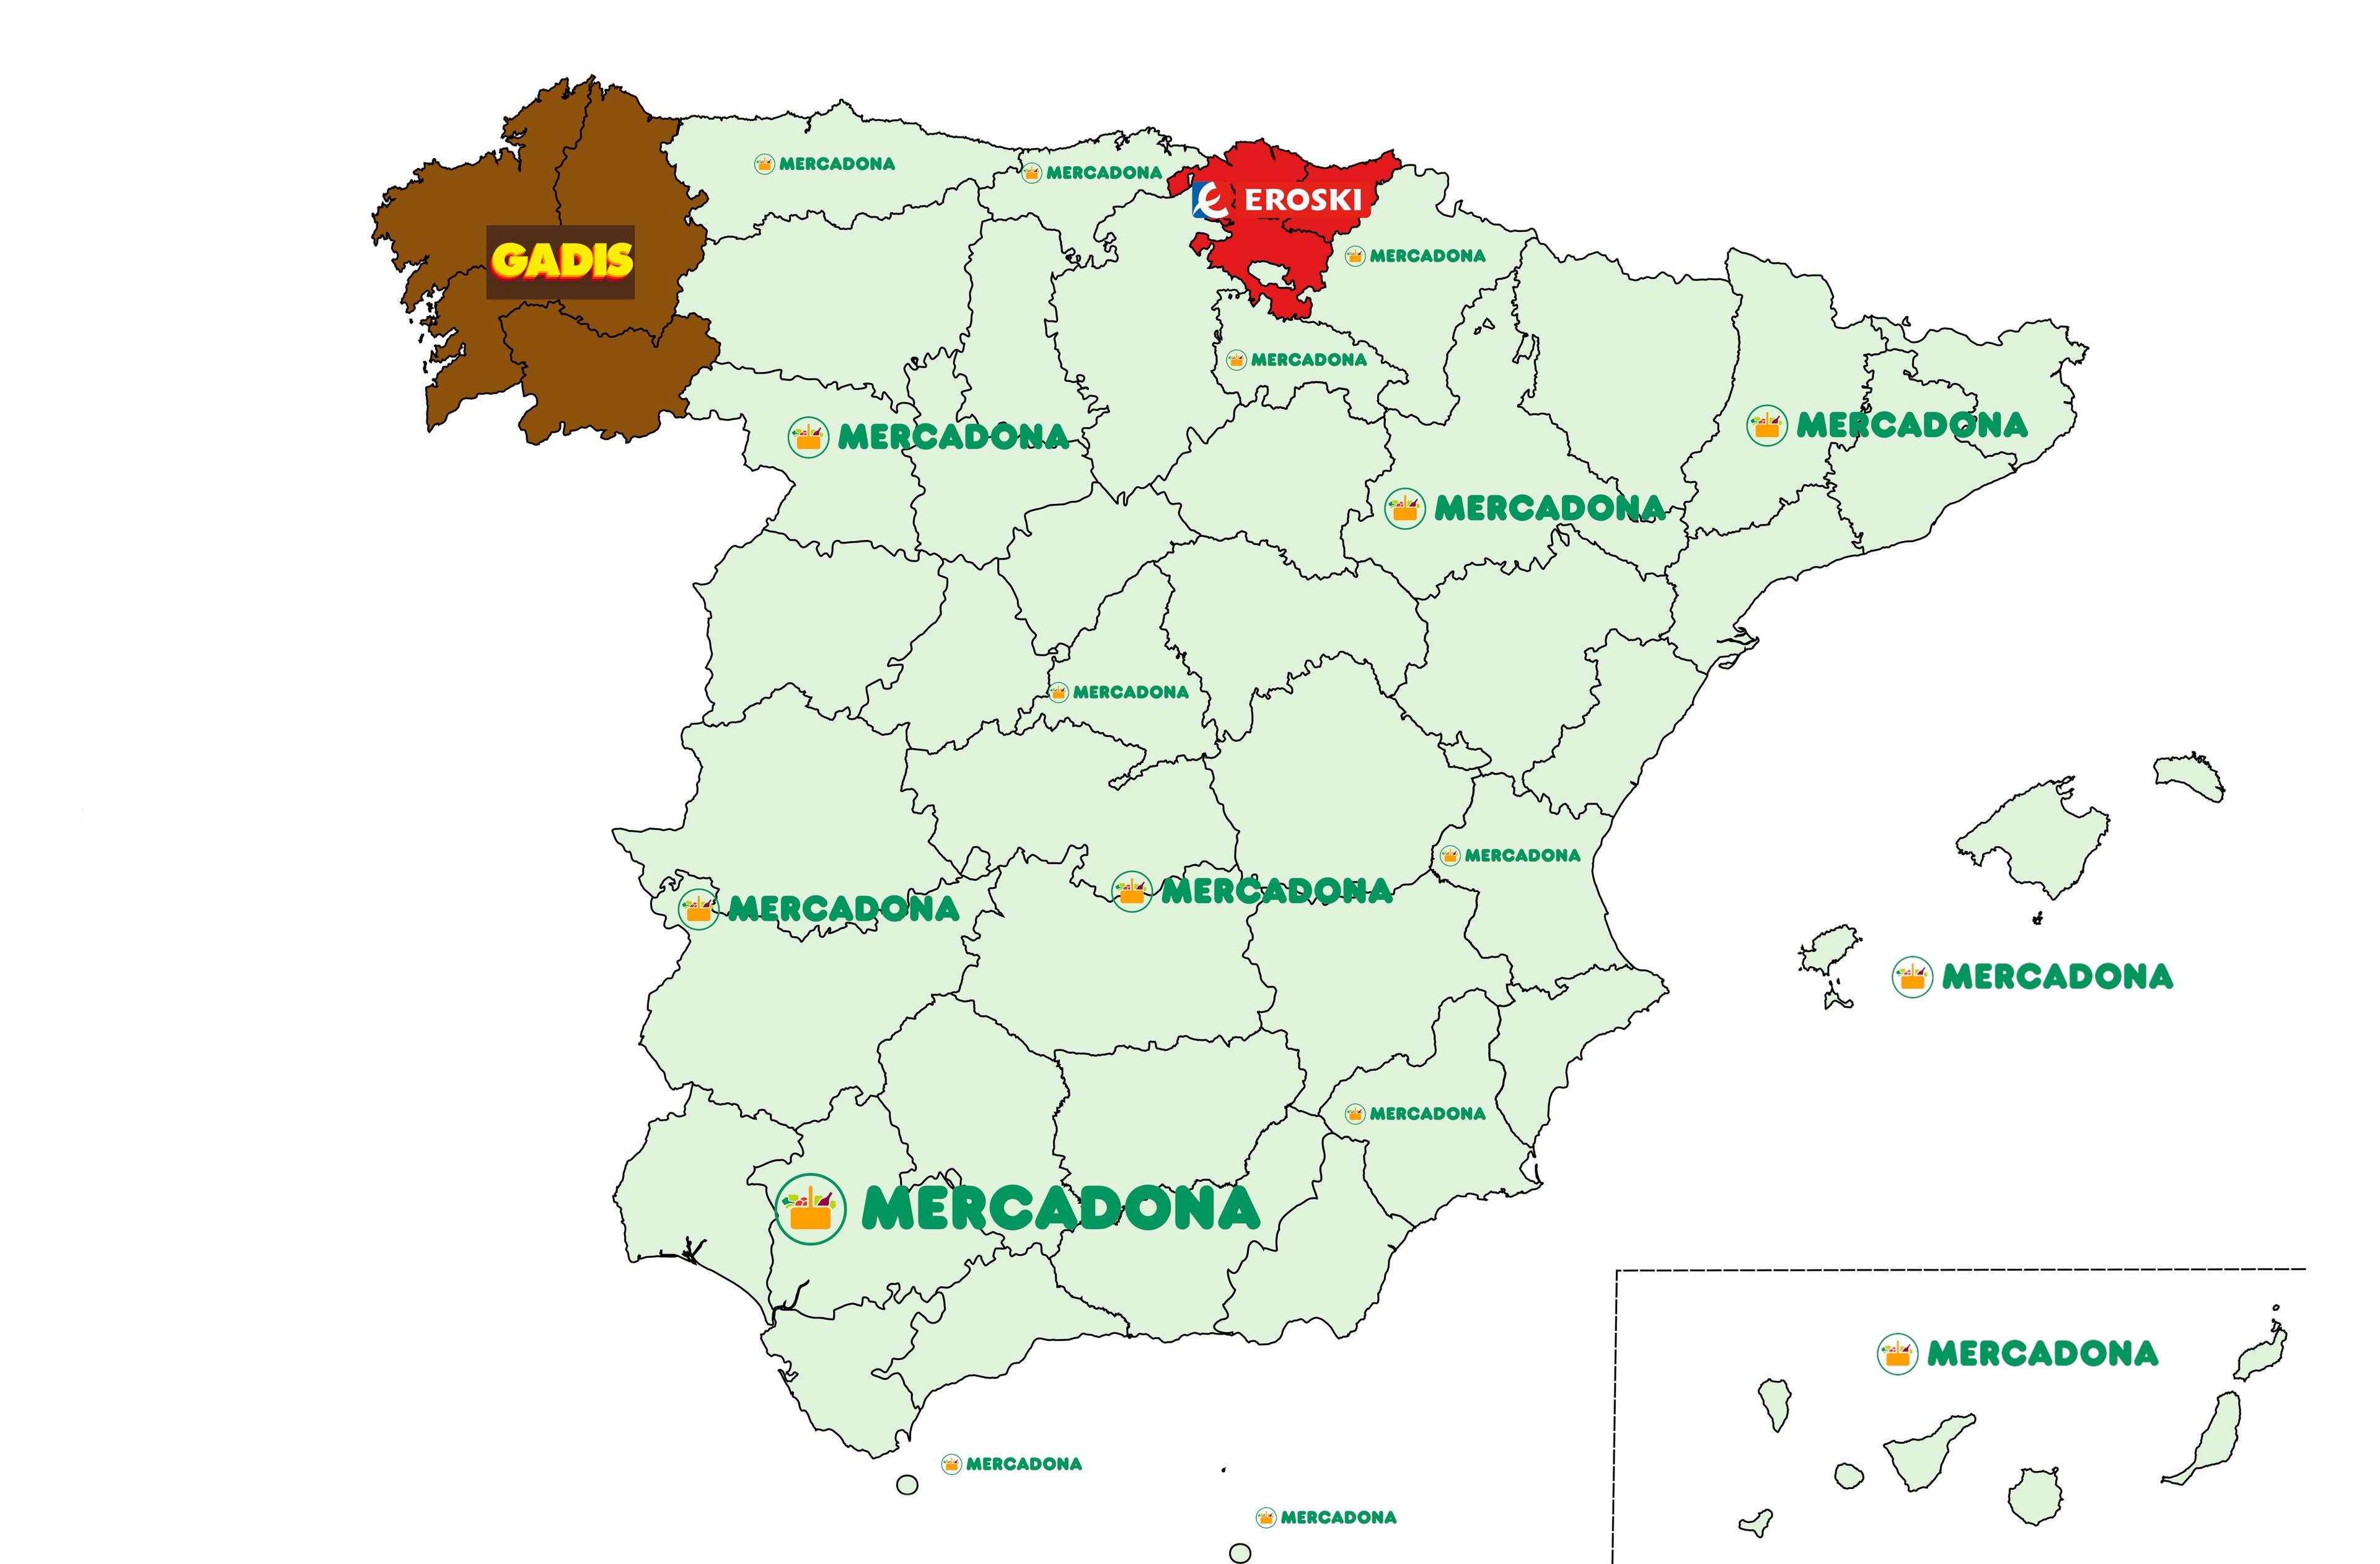 Mapa de las marcas favoritas de supermercados, por comunidades autónomas en España.